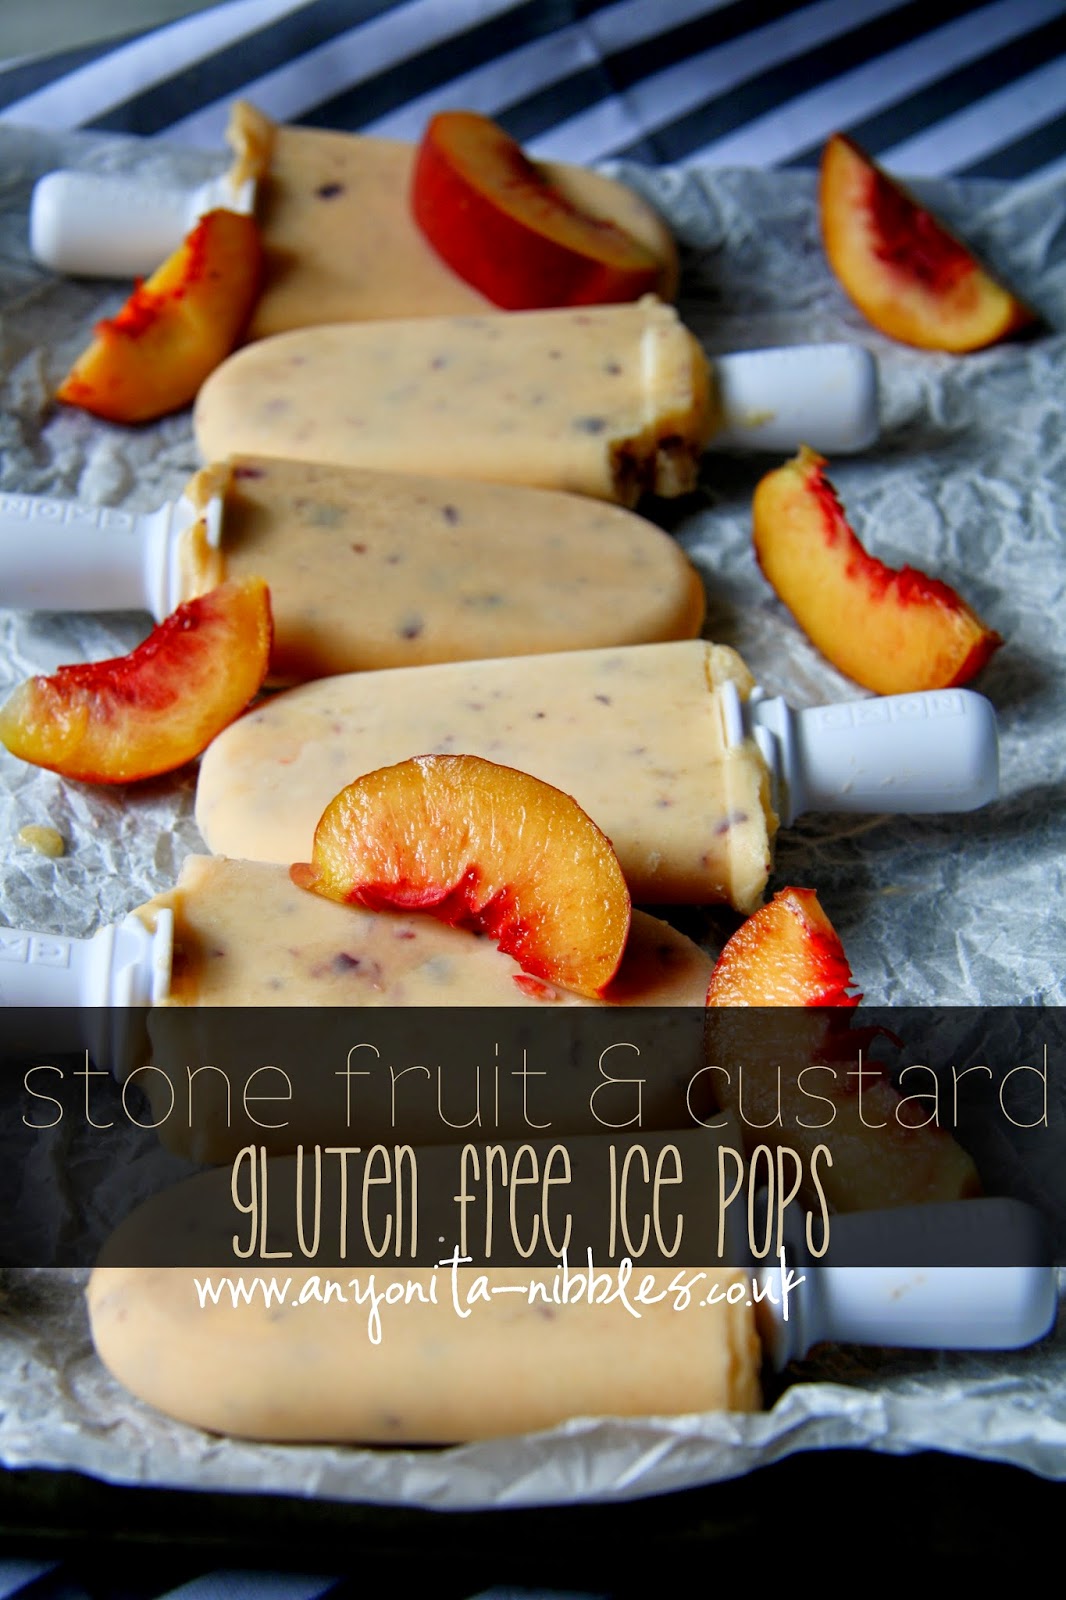 #noaddedsugar glutenfree stone fruit & custard ice pops from www.anyonita-nibbles.co.uk